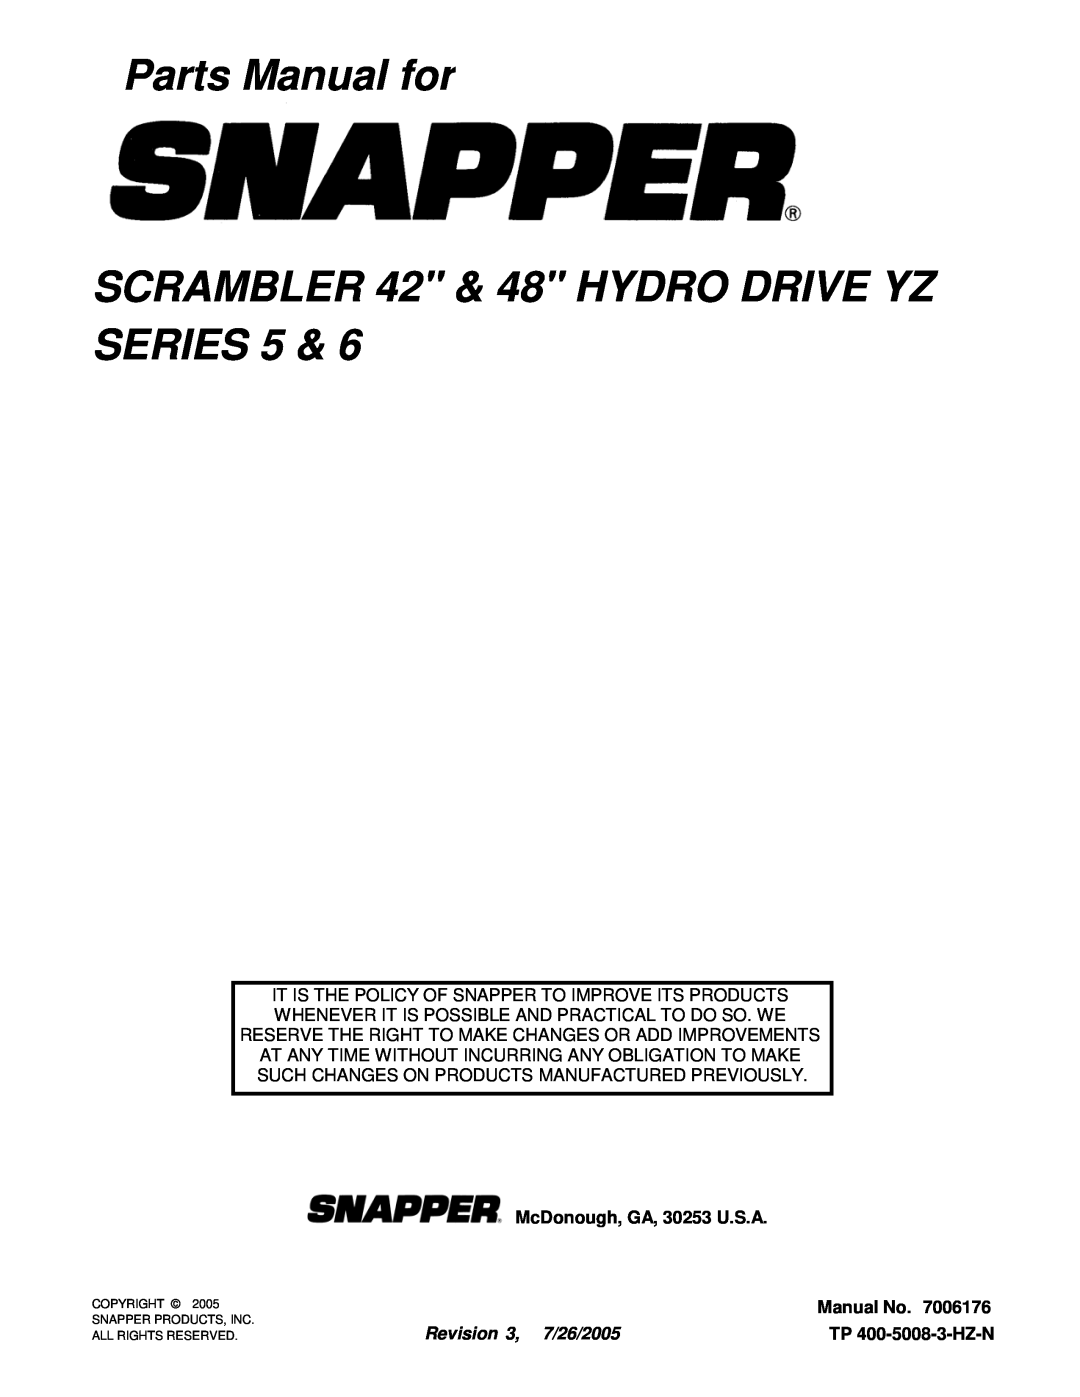 Snapper YZ20485BVE manual Parts Manual for SCRAMBLER 42 & 48 HYDRO DRIVE YZ SERIES 5, McDonough, GA, 30253 U.S.A, Manual No 